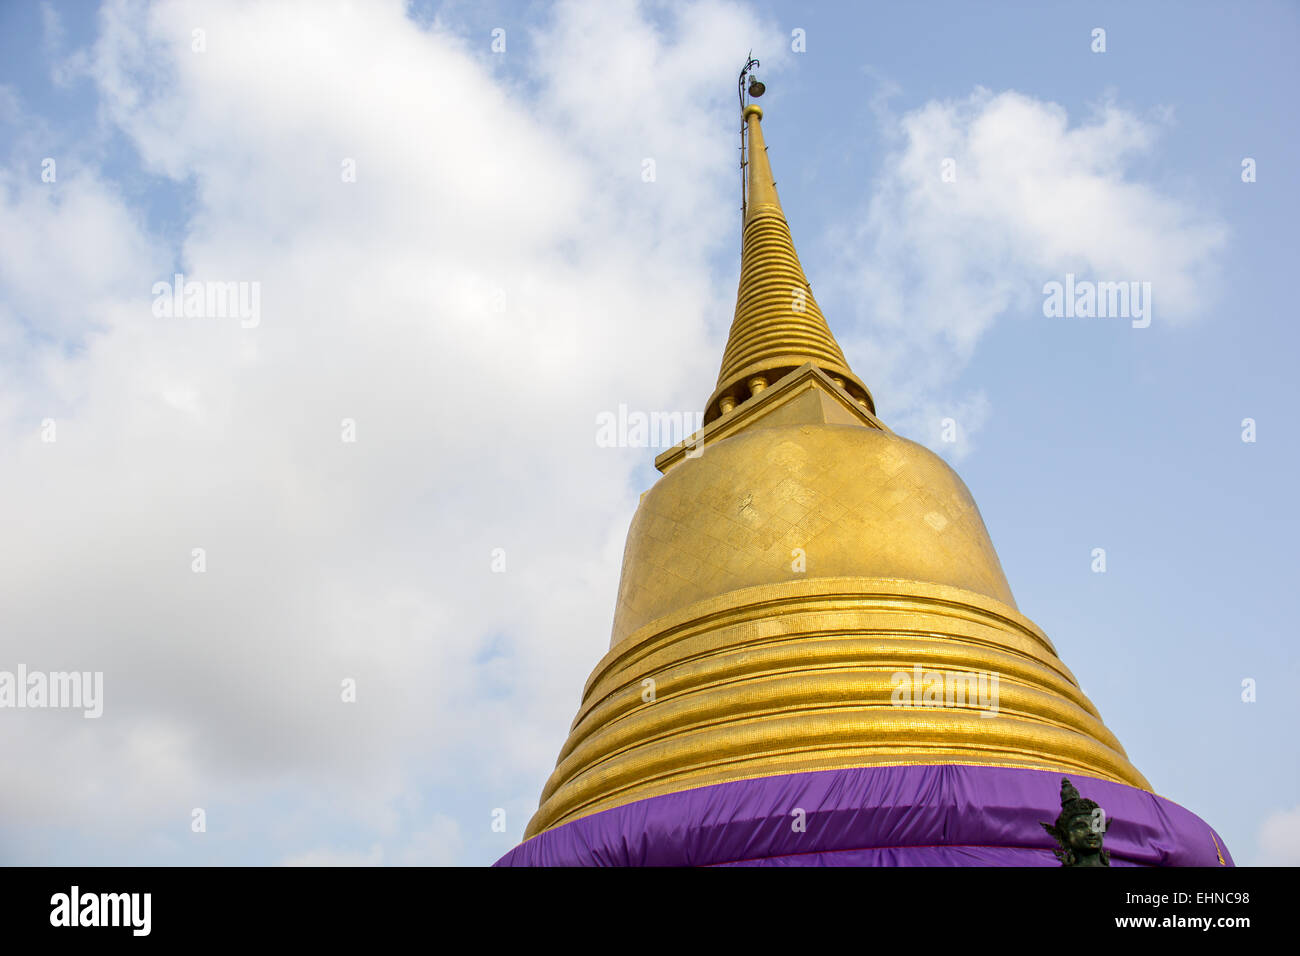 Temple, Thailand, churches, pagodas, golden, calm place, Thailand, beautiful. Stock Photo